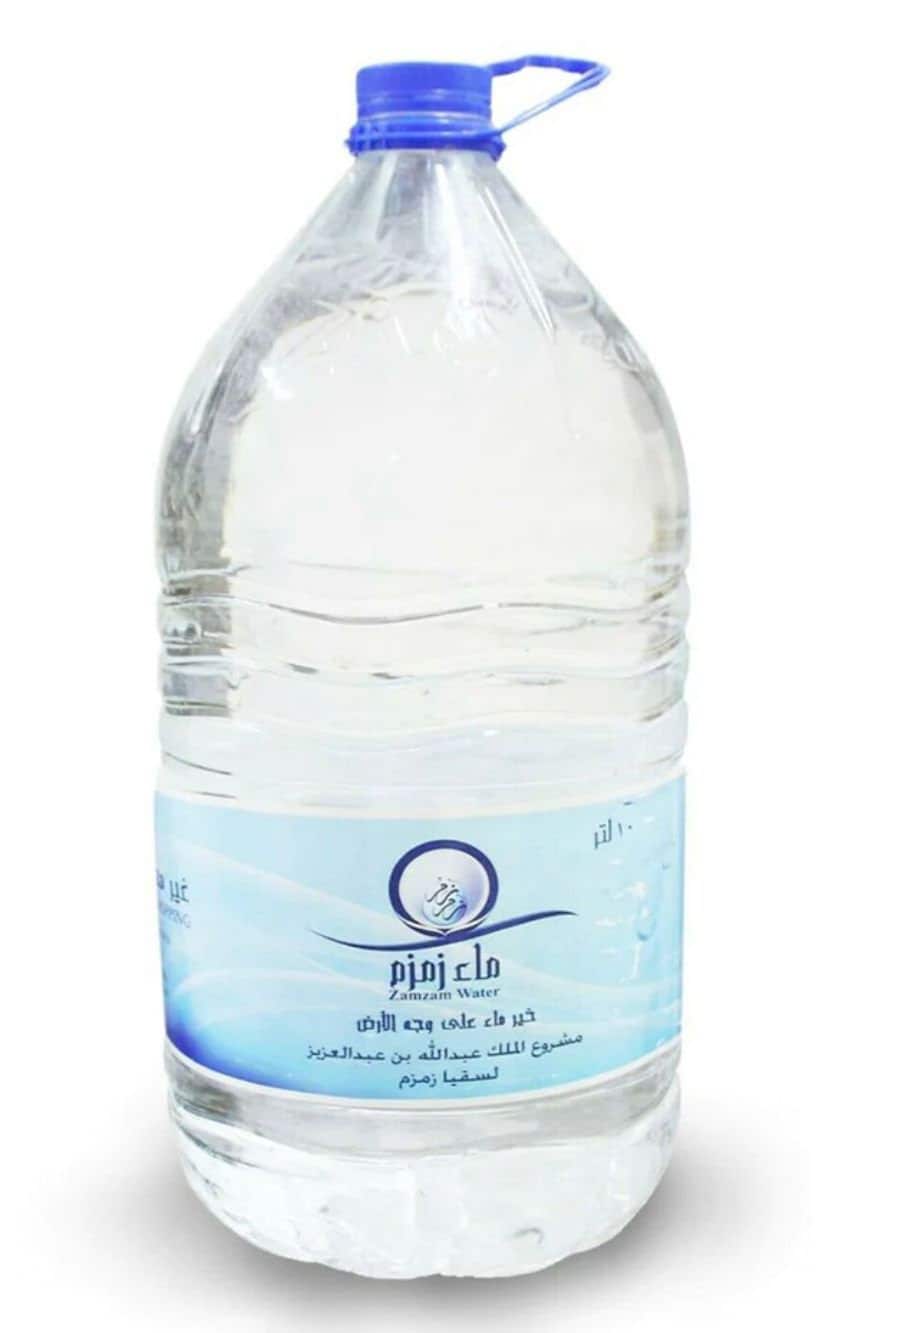 Zam Zam - Eau de Makkah - 5 litres - Original Makka - Source d'eau - Mecca  Zamzam : : Epicerie